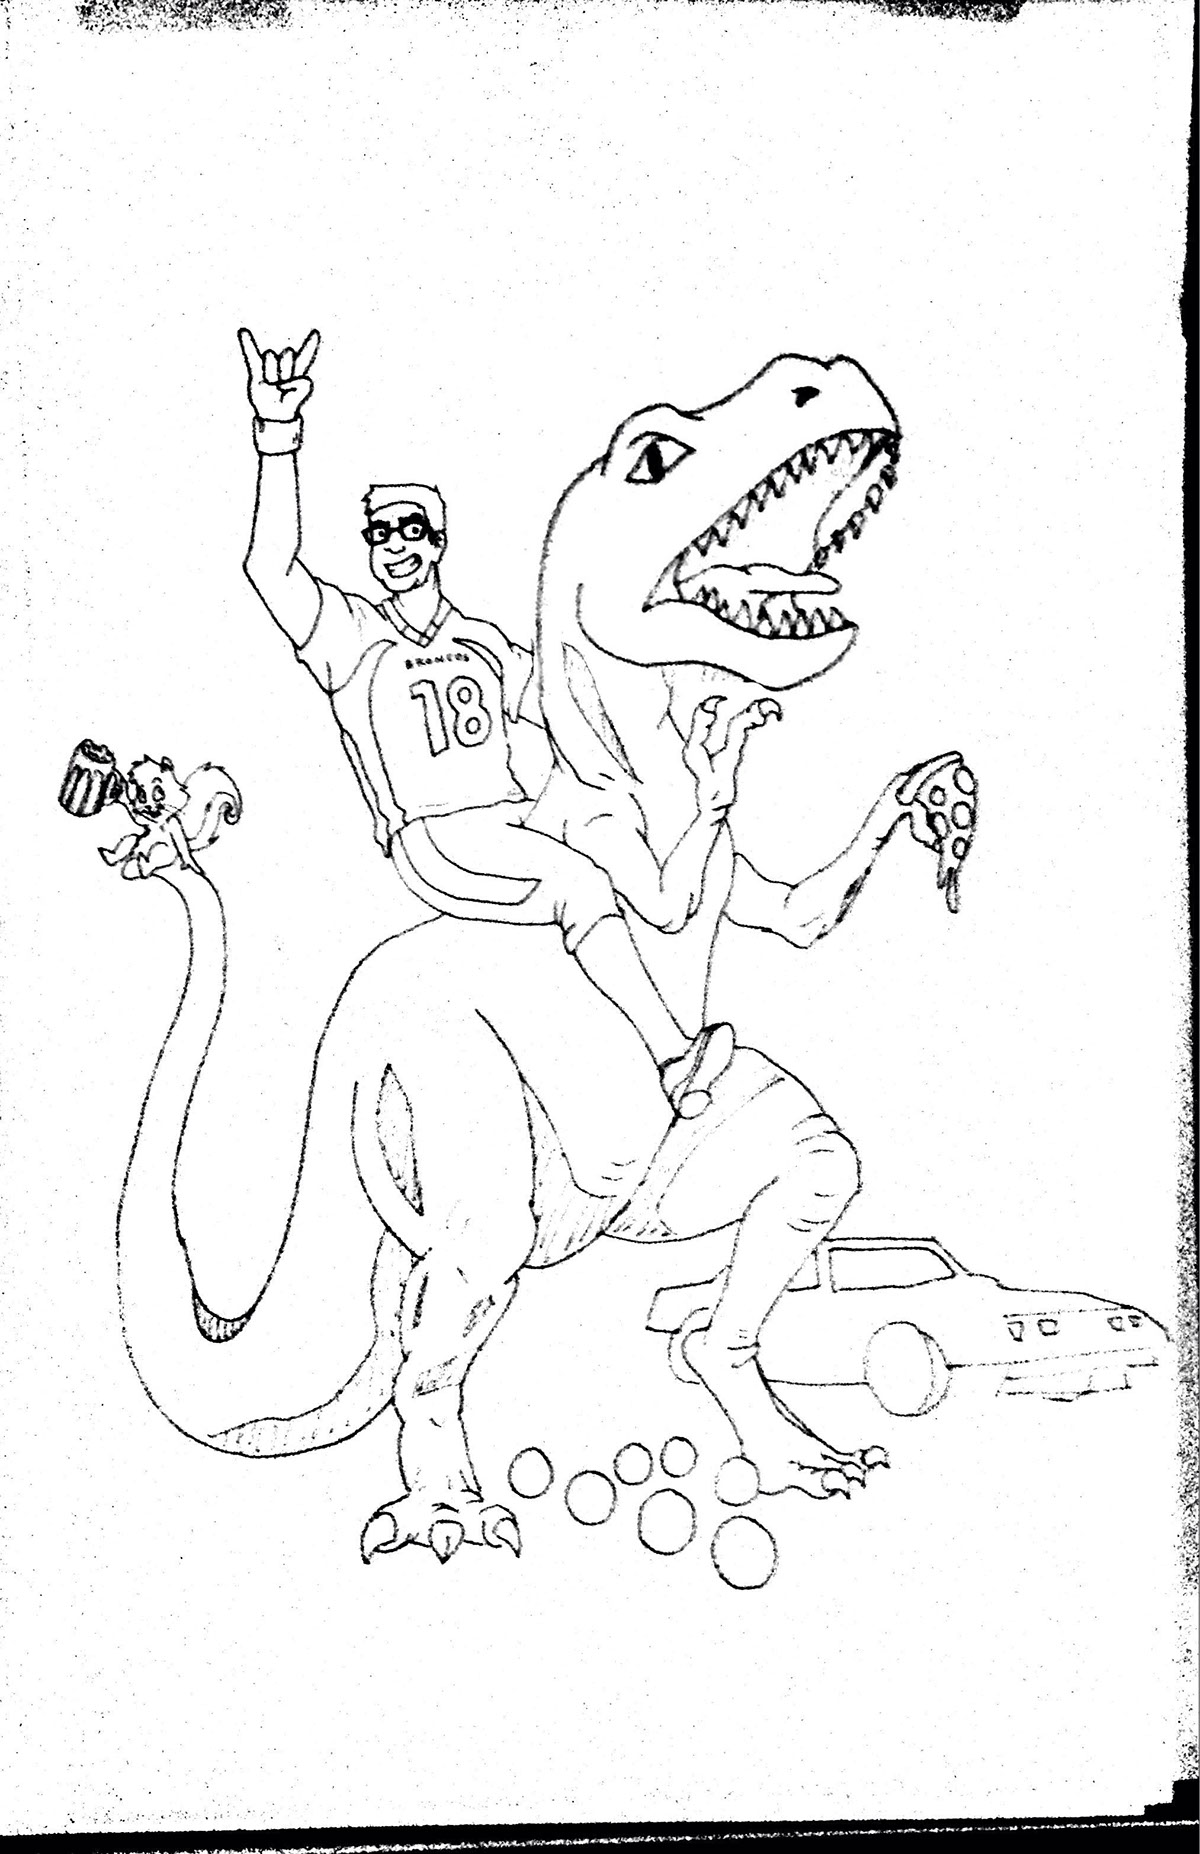 Dinosaur trex dragon ball z Pizza broncos poster fantasy